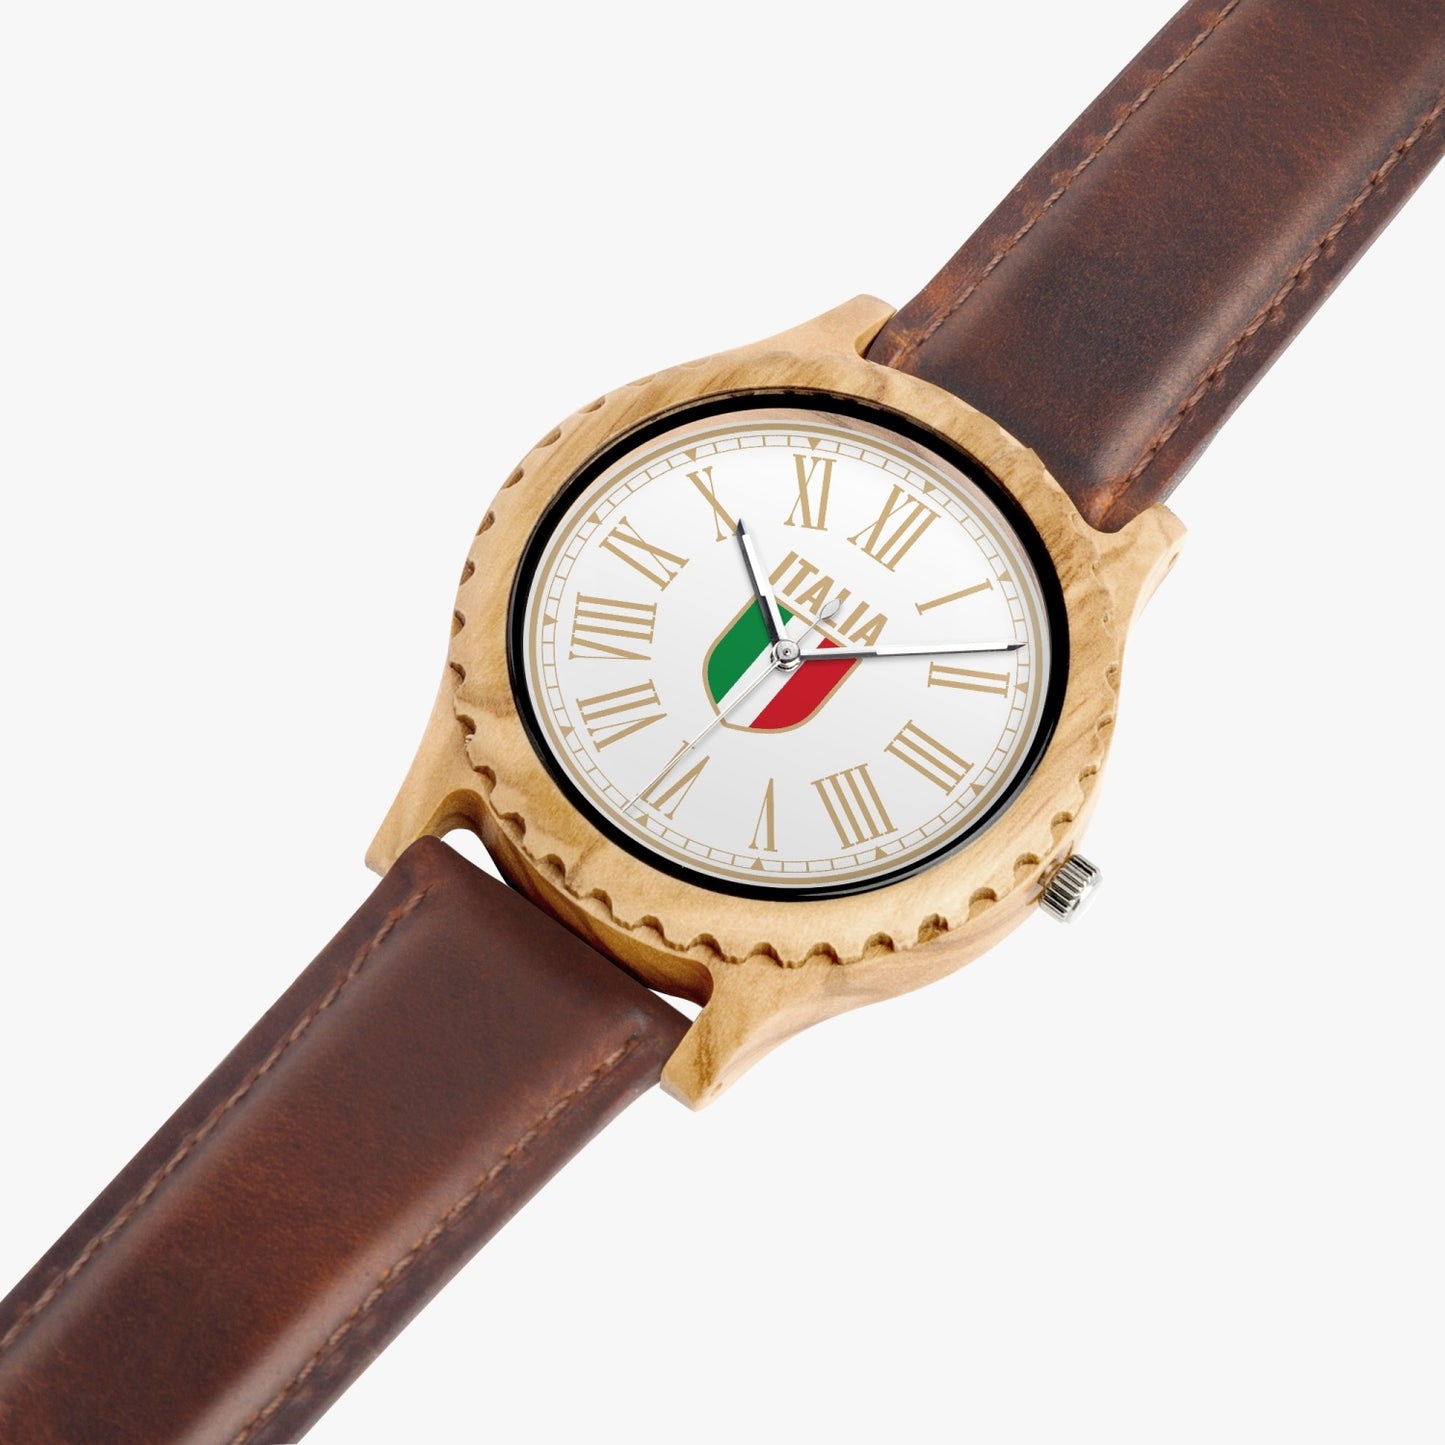 Italian Olive wooden watch - Italia